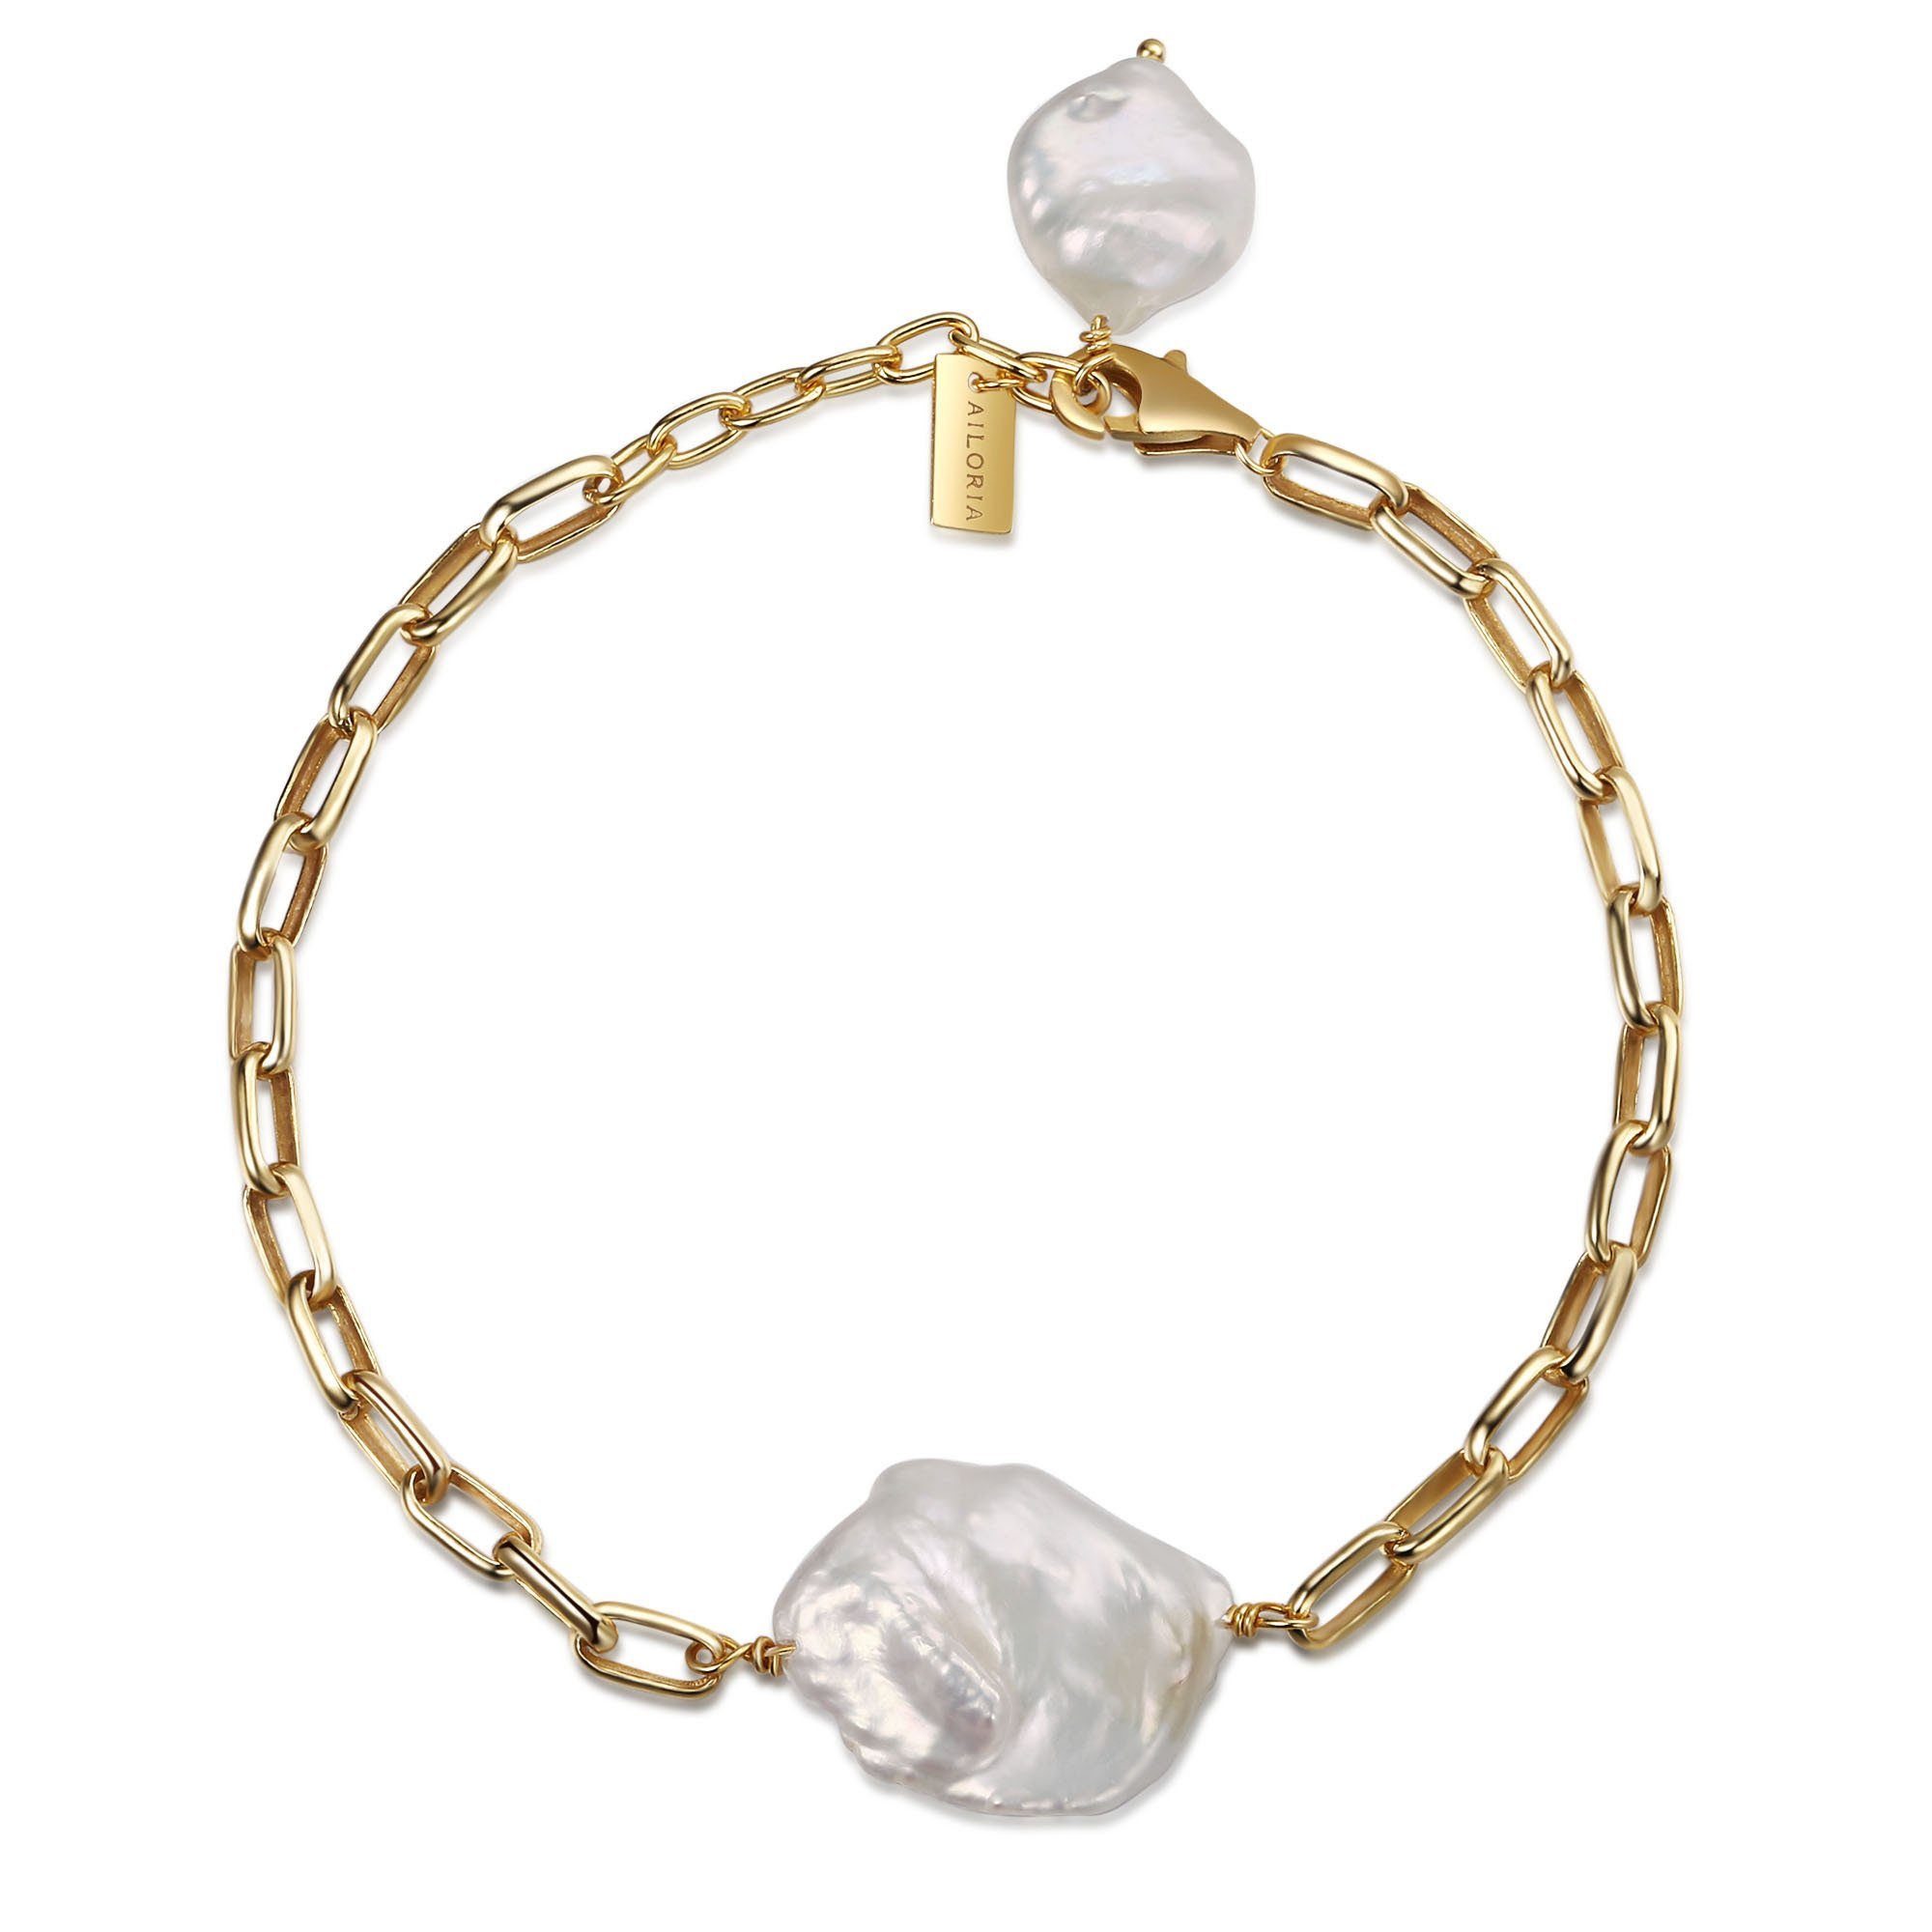 AILORIA Armband SHINJU armband gold/weiße perle, Armband gold/weiße Perle